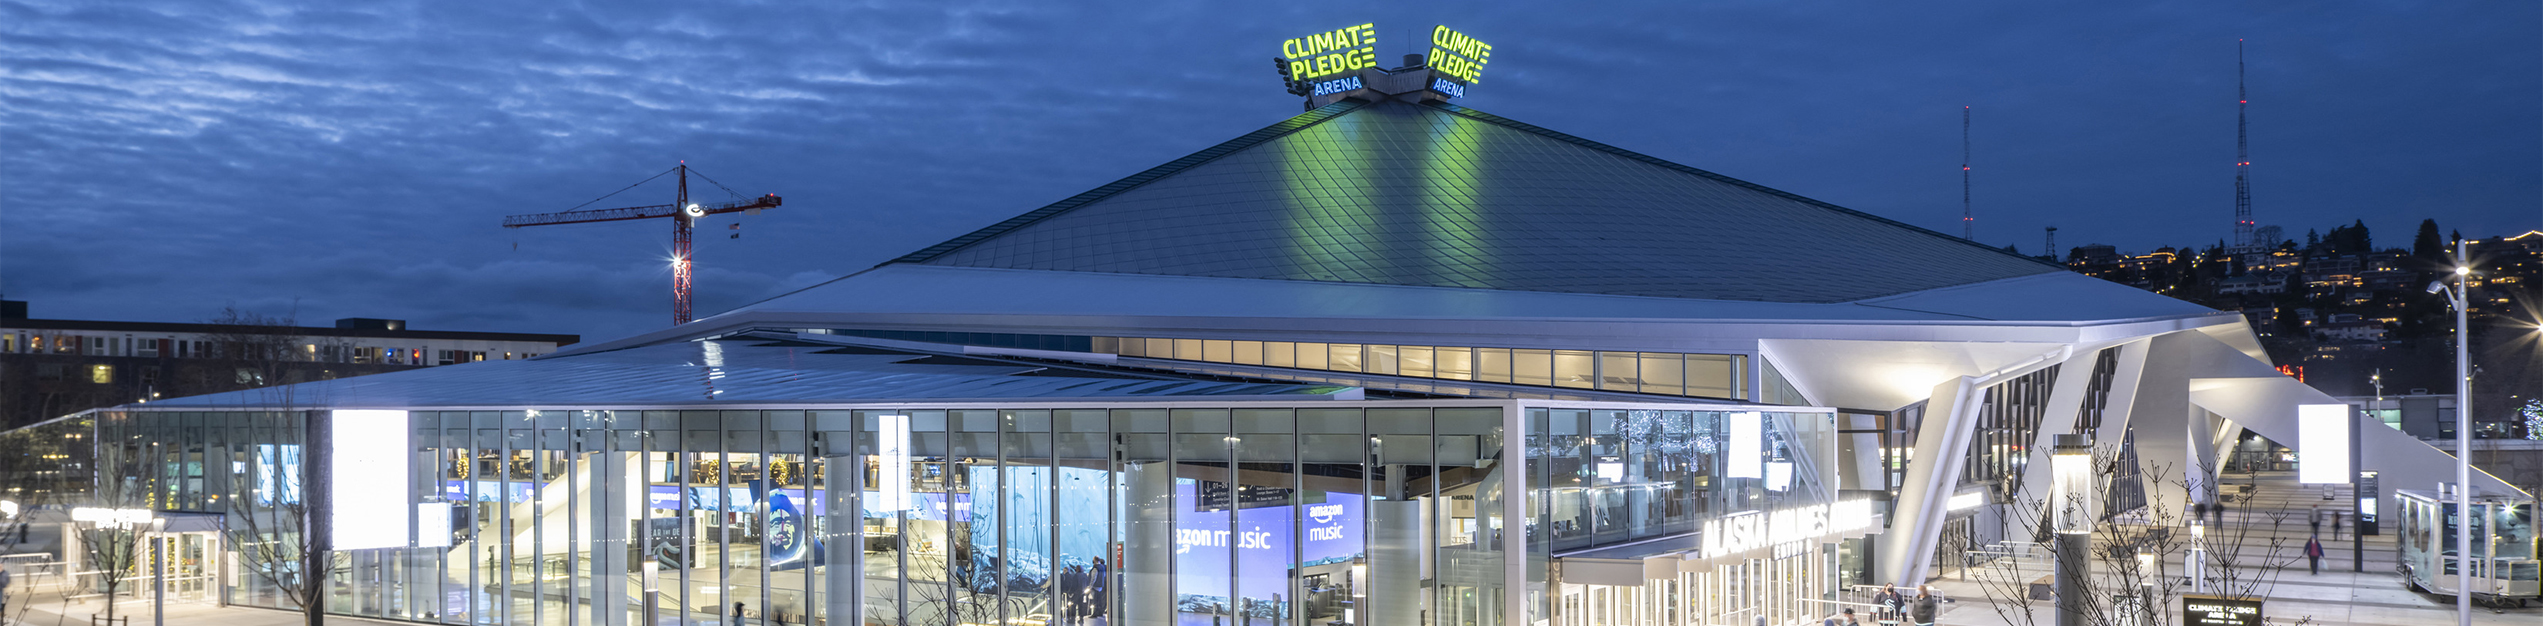 Climate Pledge Arena final exterior night